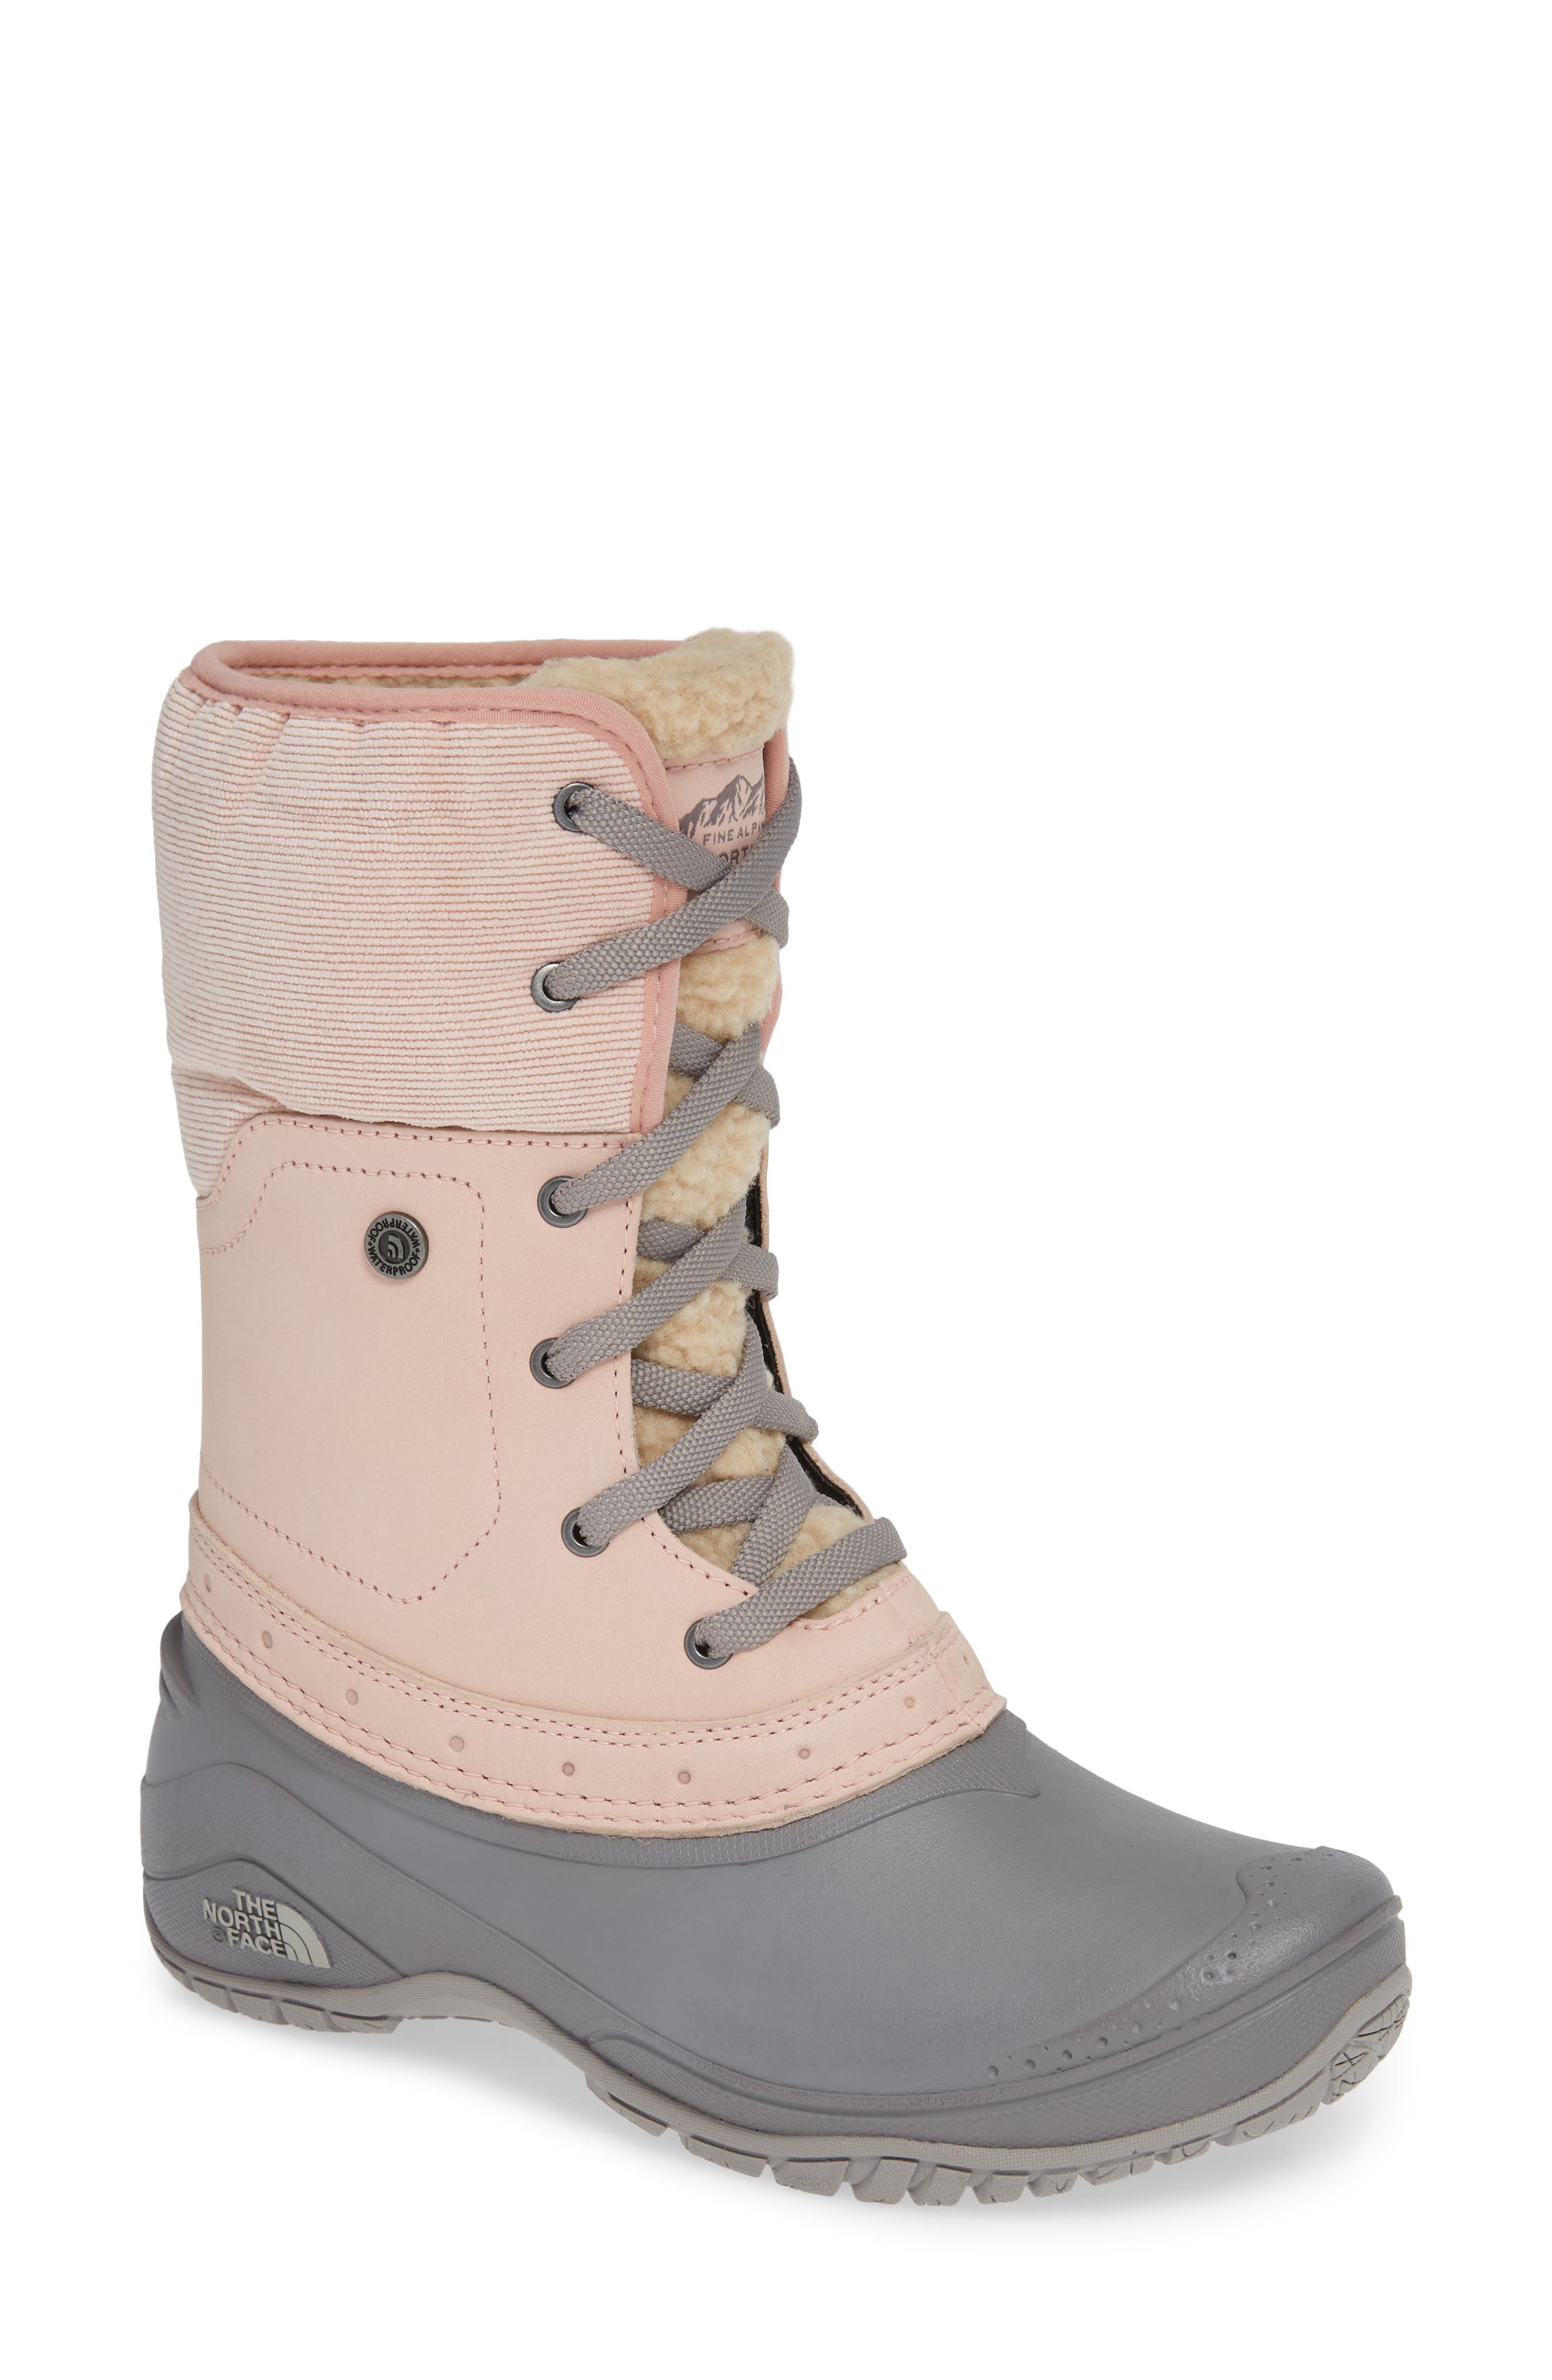 nordstrom winter boots